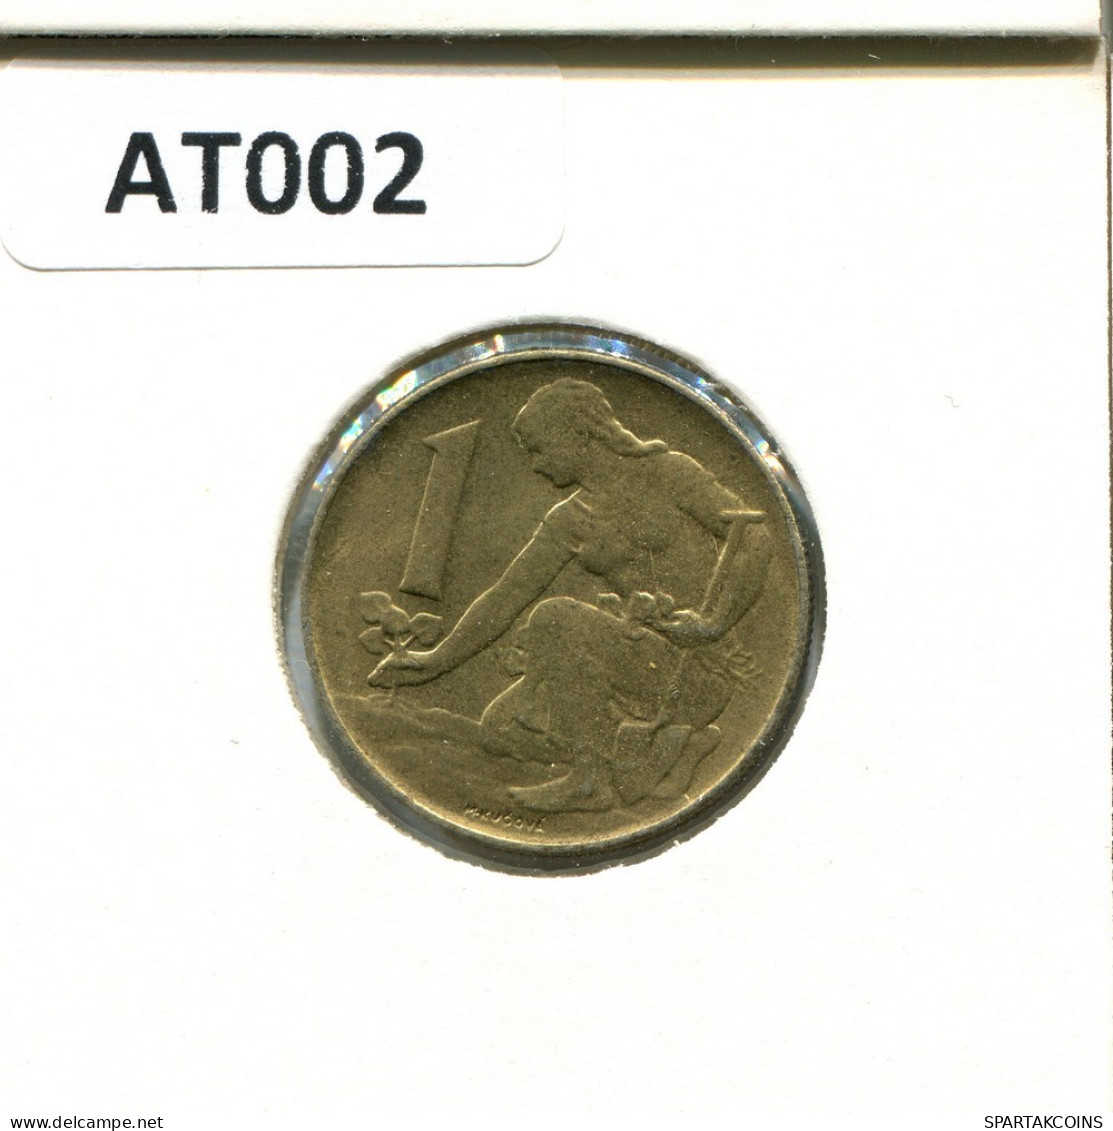 1 KORUNA 1992 CZECHOSLOVAKIA Coin #AT002.U.A - Tsjechoslowakije